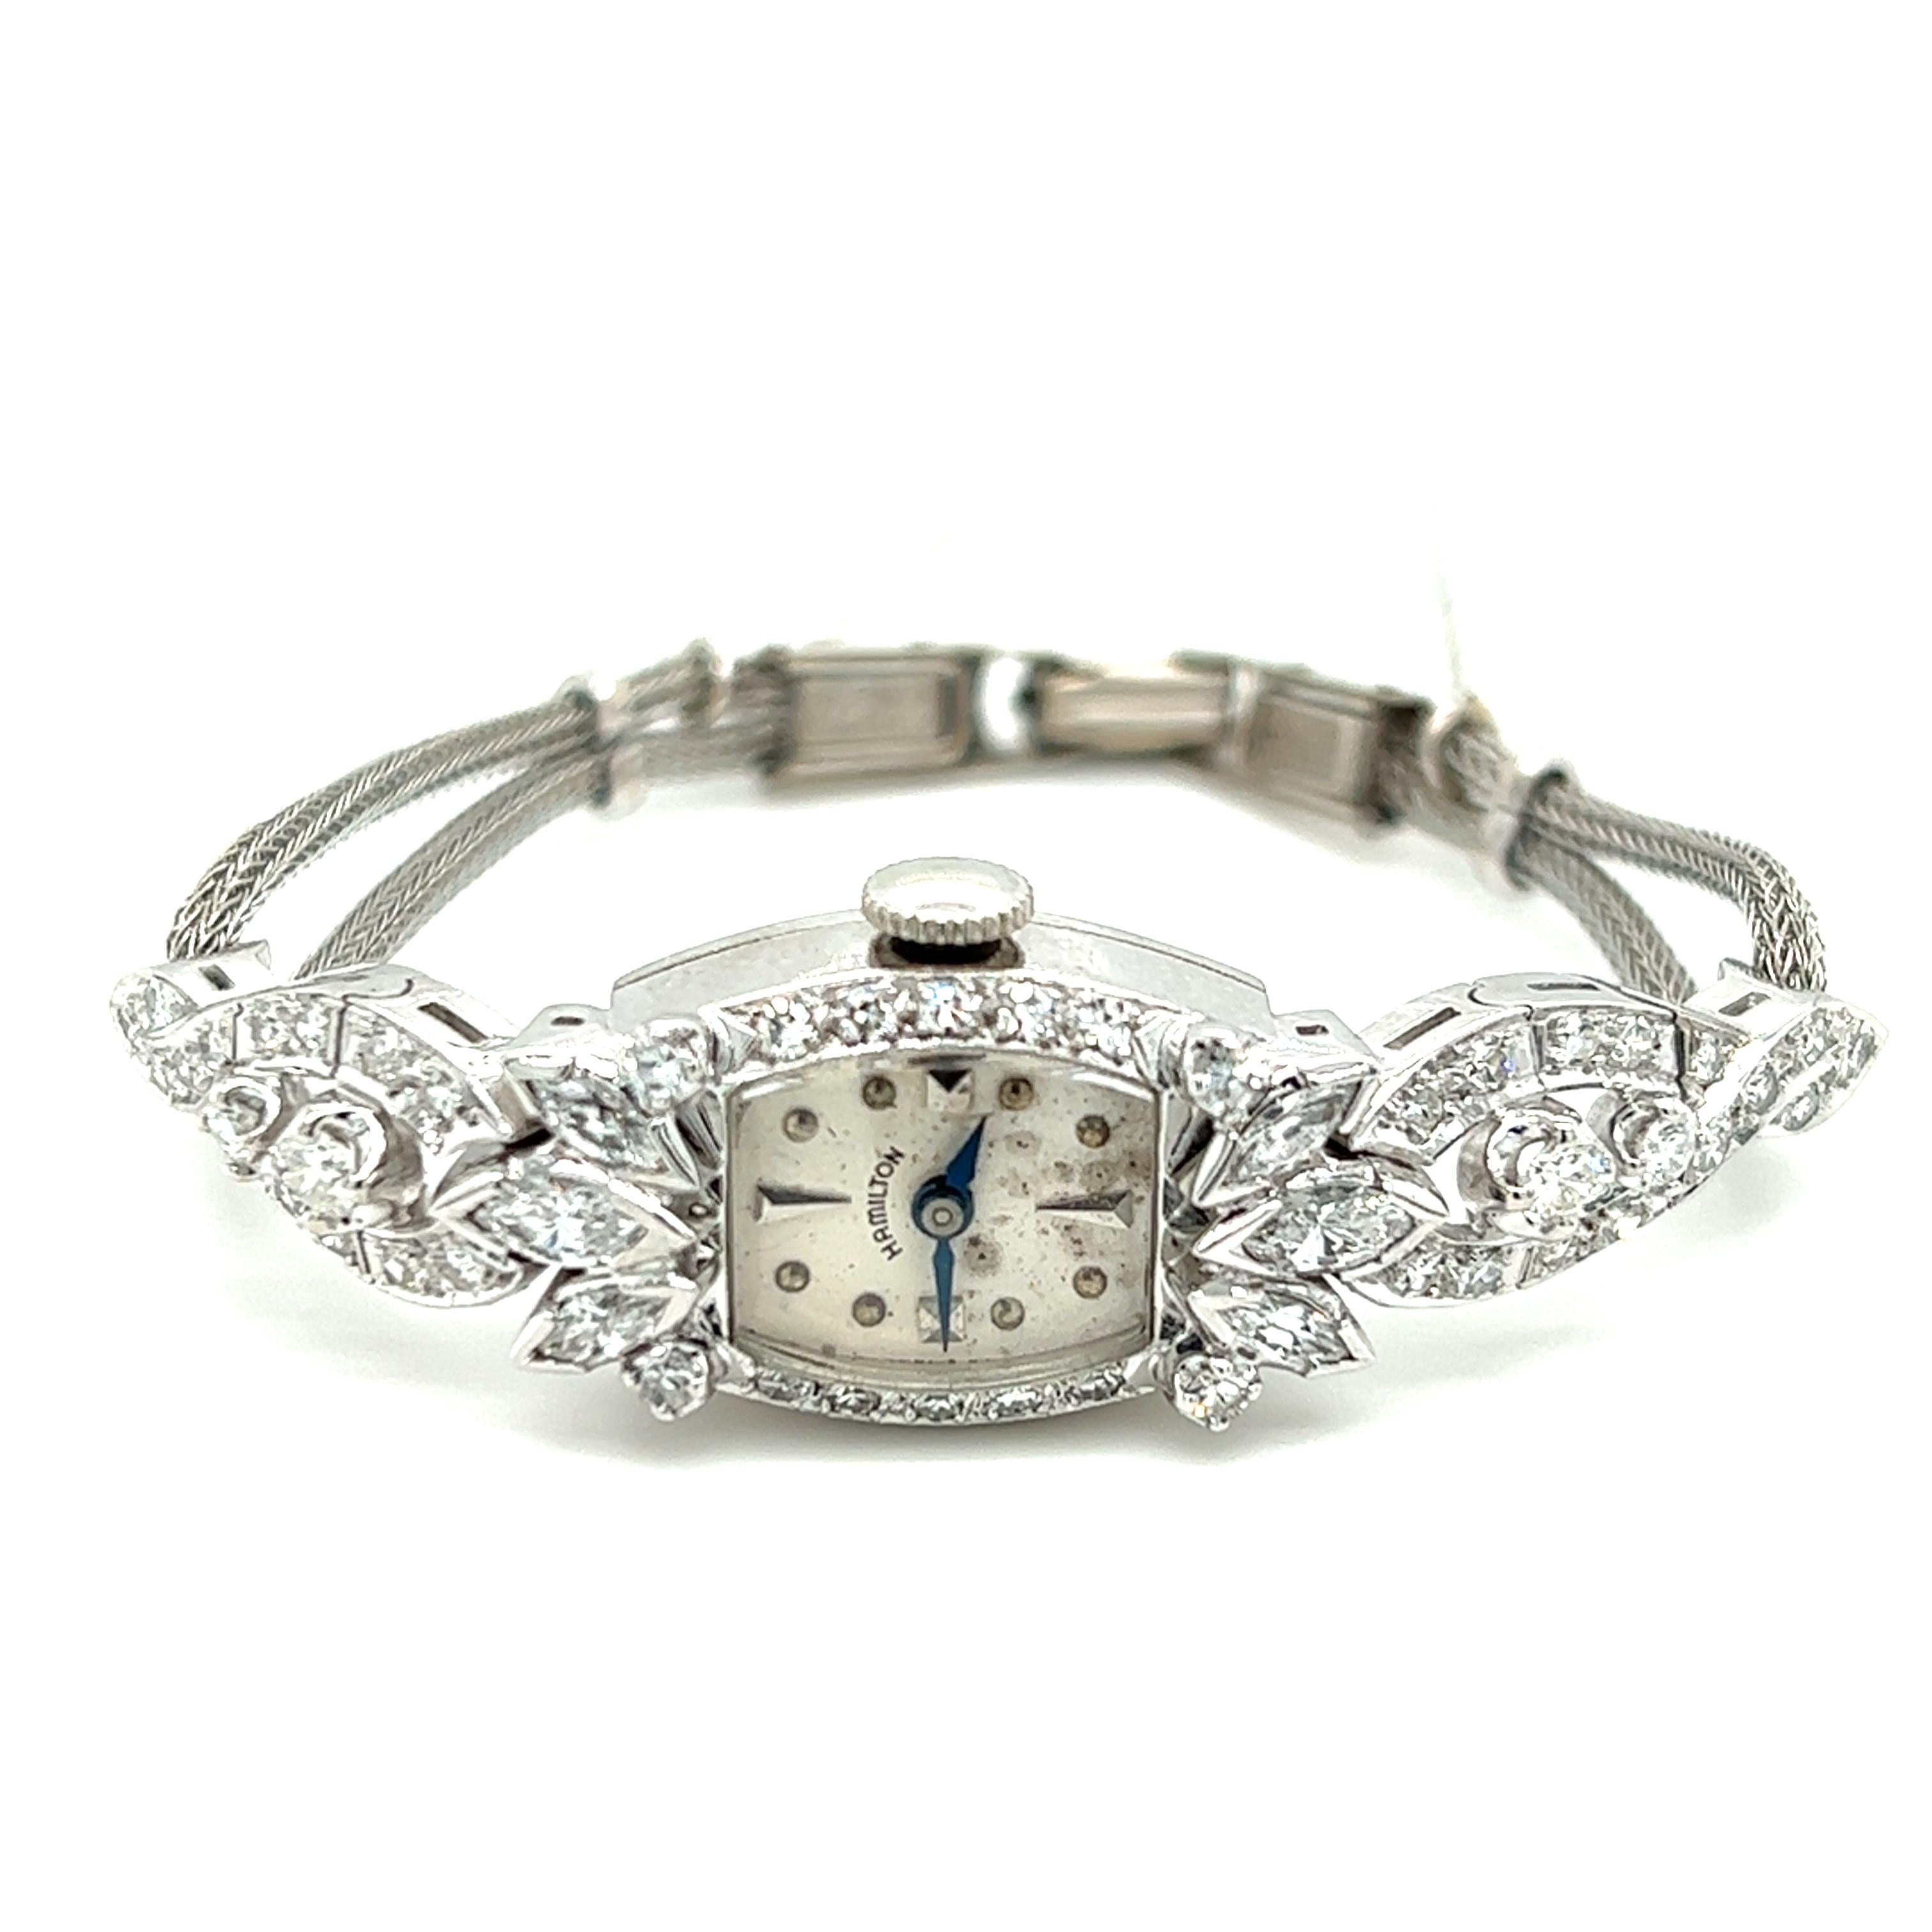 Brilliant Cut Hamilton Ladies White Gold Diamond Bracelet Watch, Circa 1960